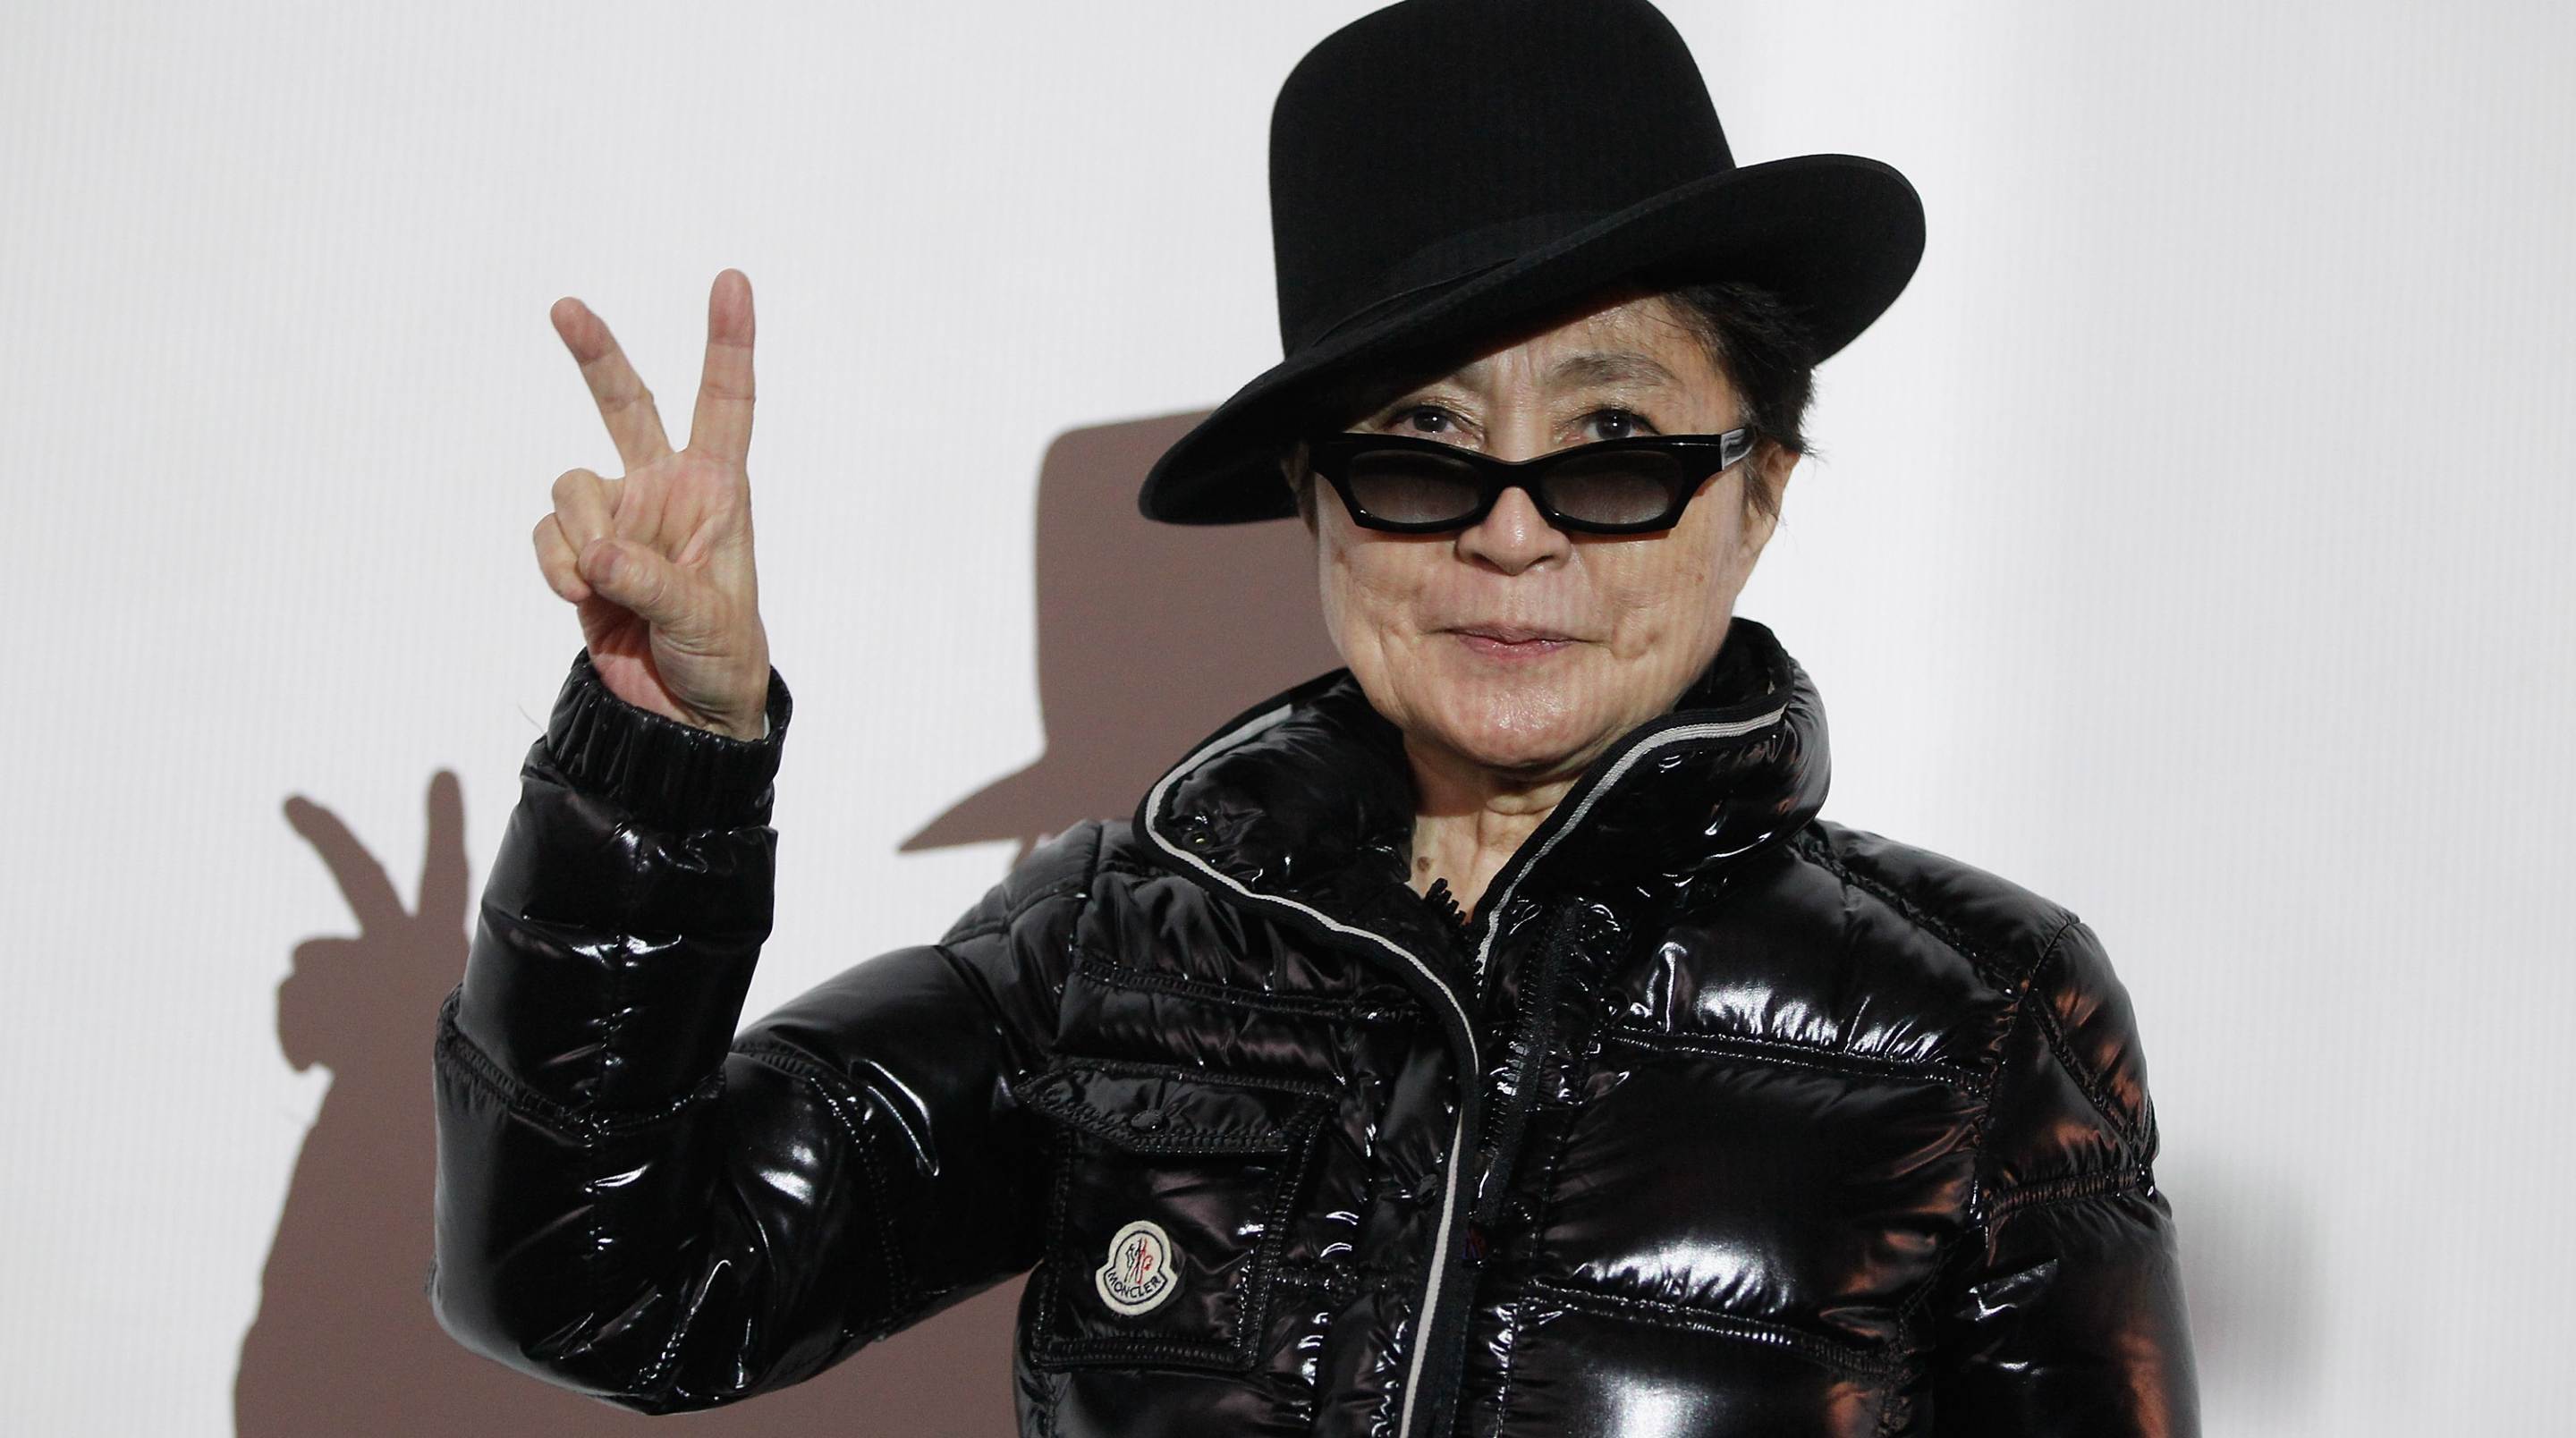 Yoko Ono Wallpaper Image Photo Picture Background